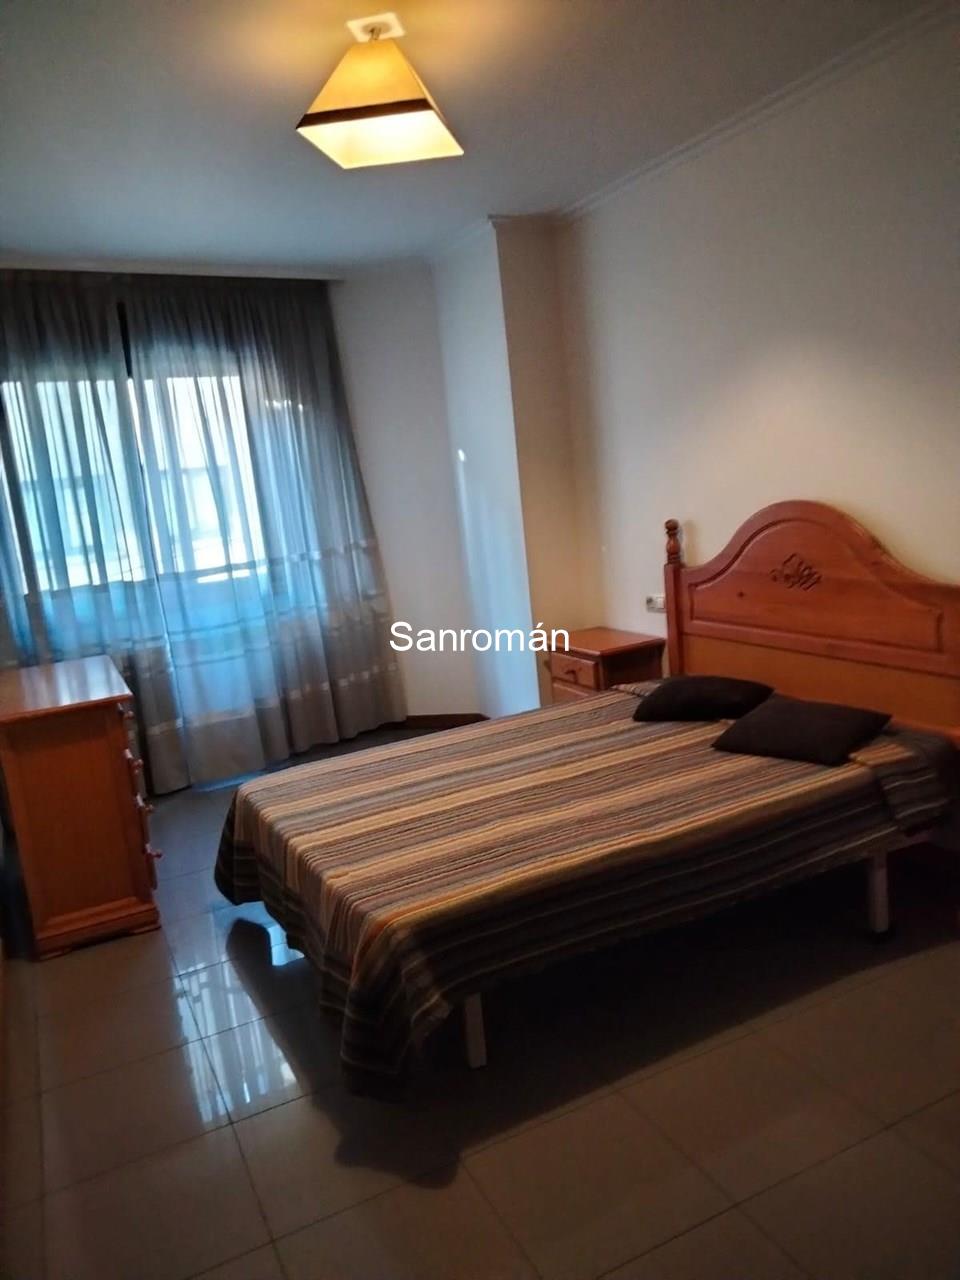 Foto 5 Apartamento de 2 dormitorios en Ramallosa - Nigrán.